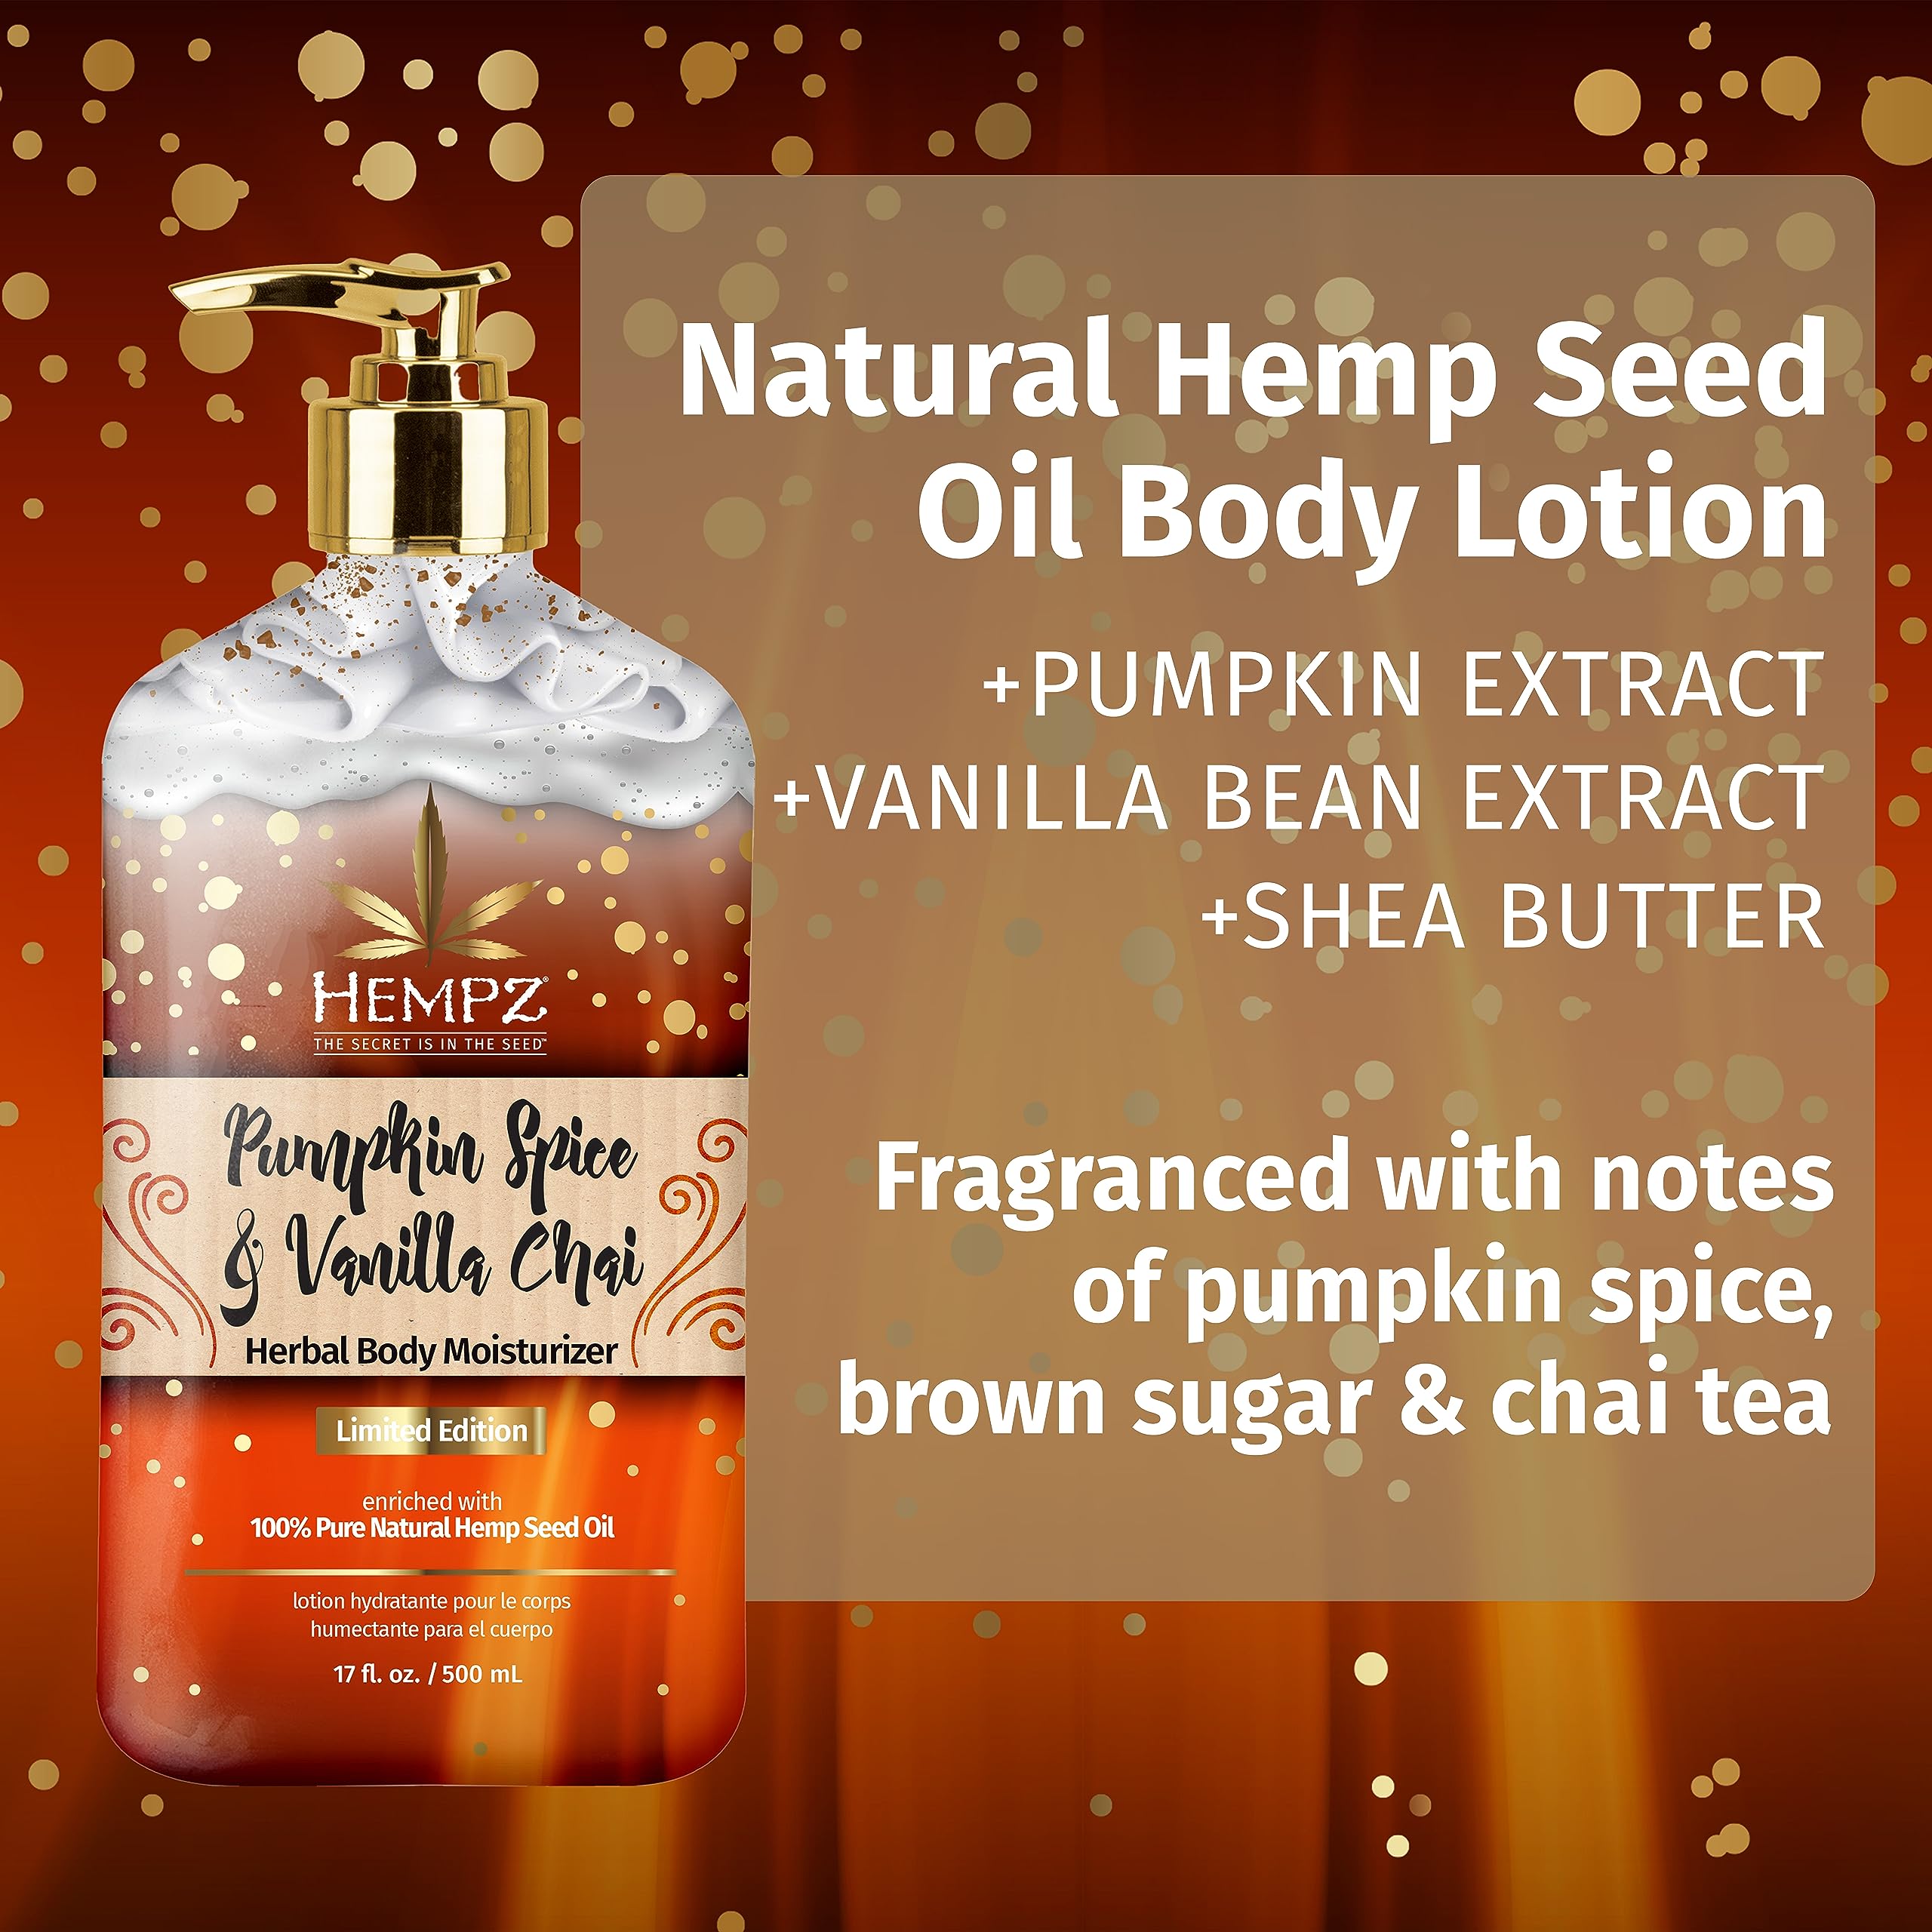 Limited Edition Pumpkin Spice & Vanilla Chai Herbal Body Moisturizer 17 oz.